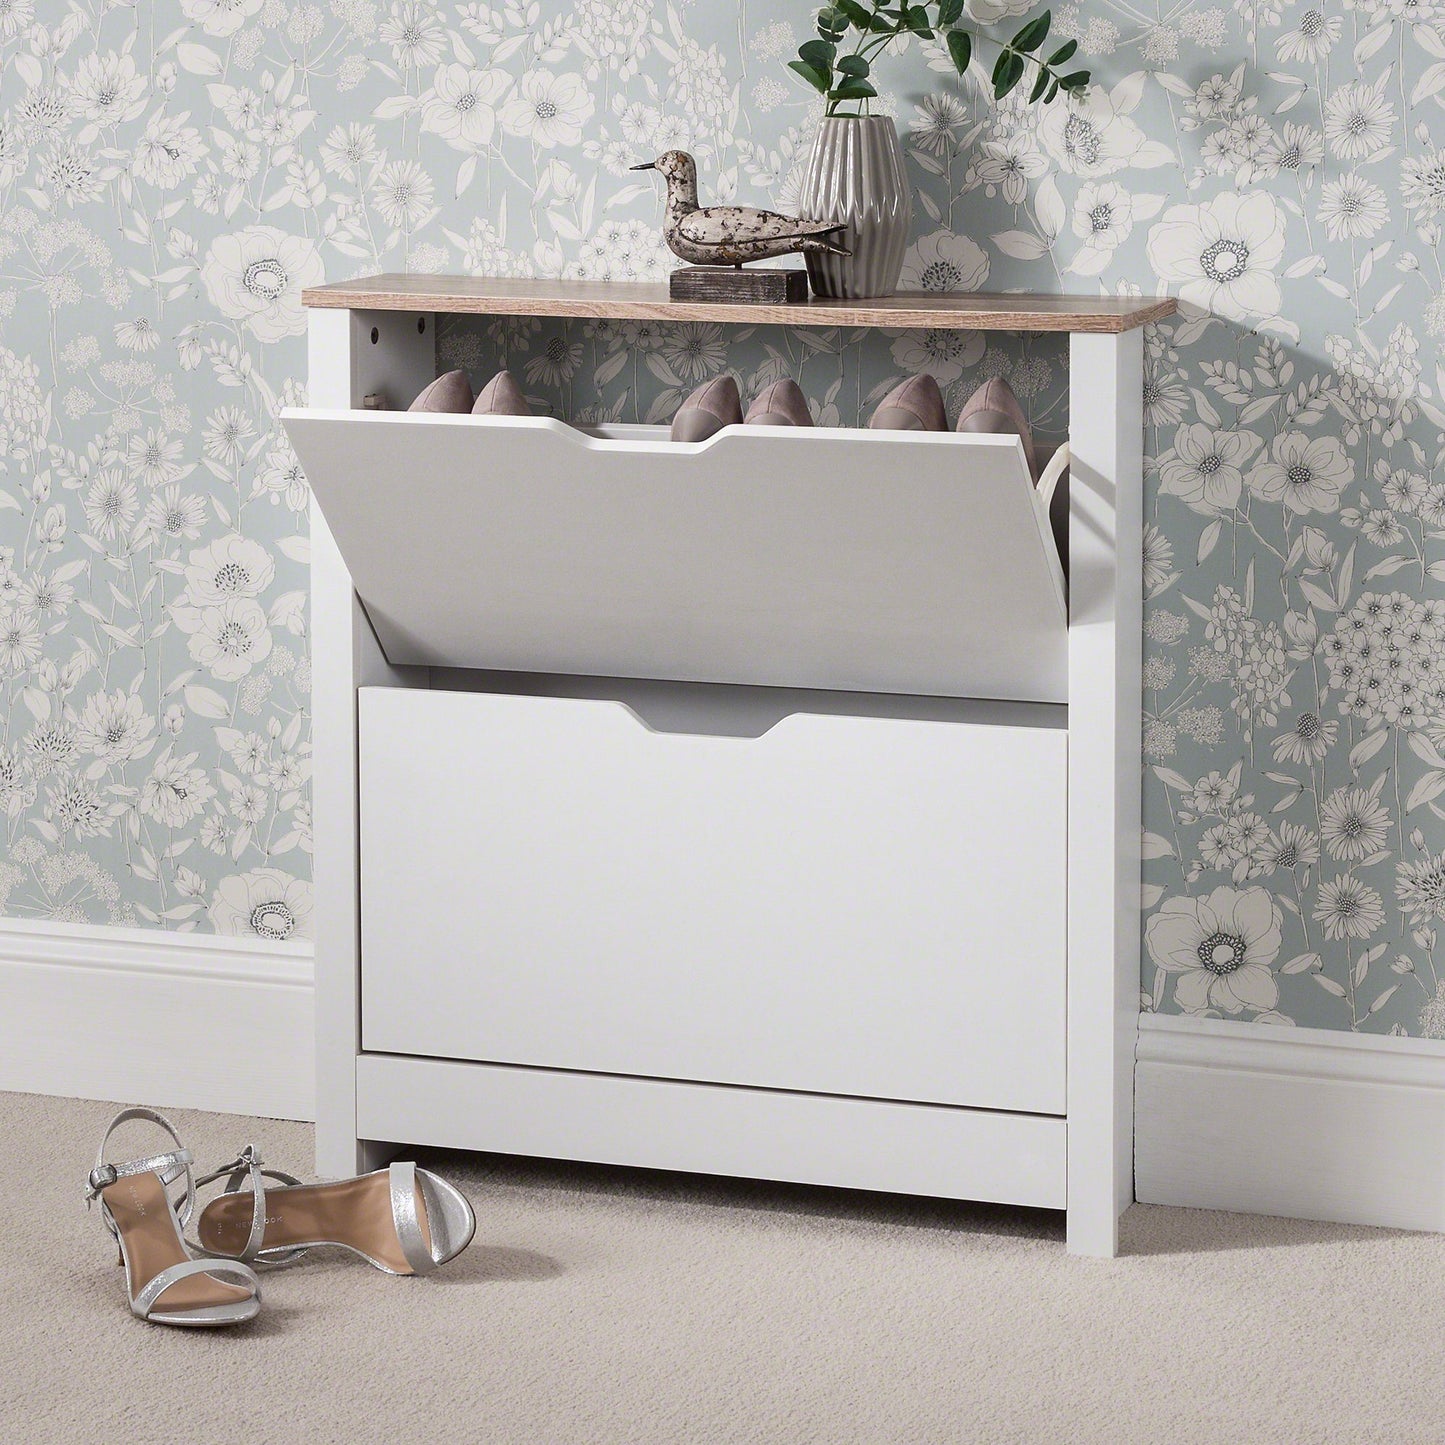 White Shoe Cabinet Wooden Storage - Laura James